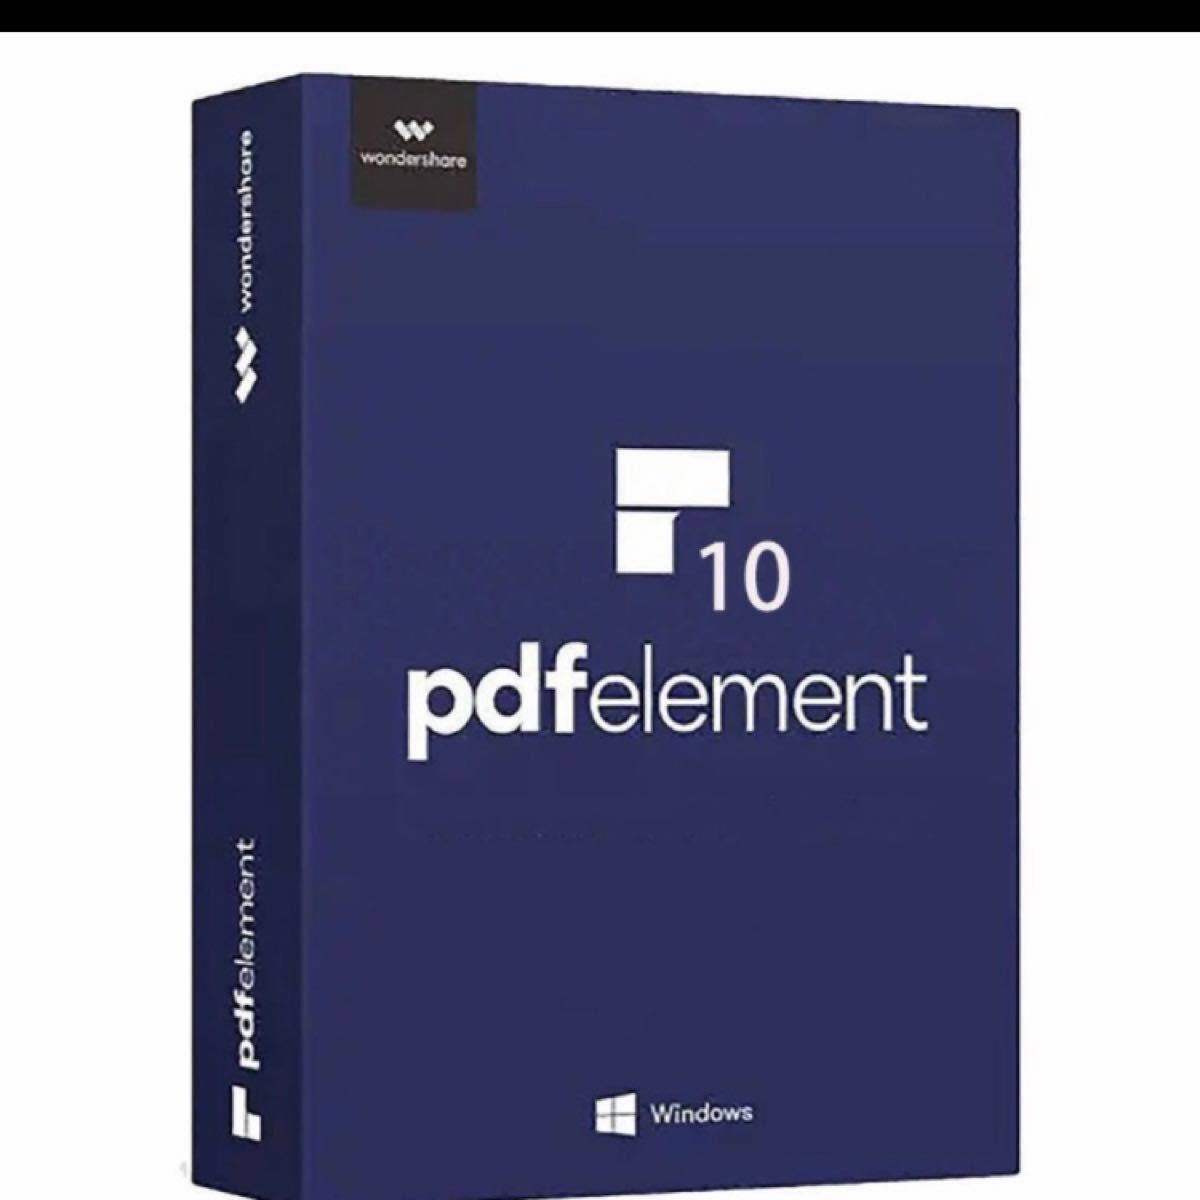 Wondershare PDFelement Pro 10 Windows 